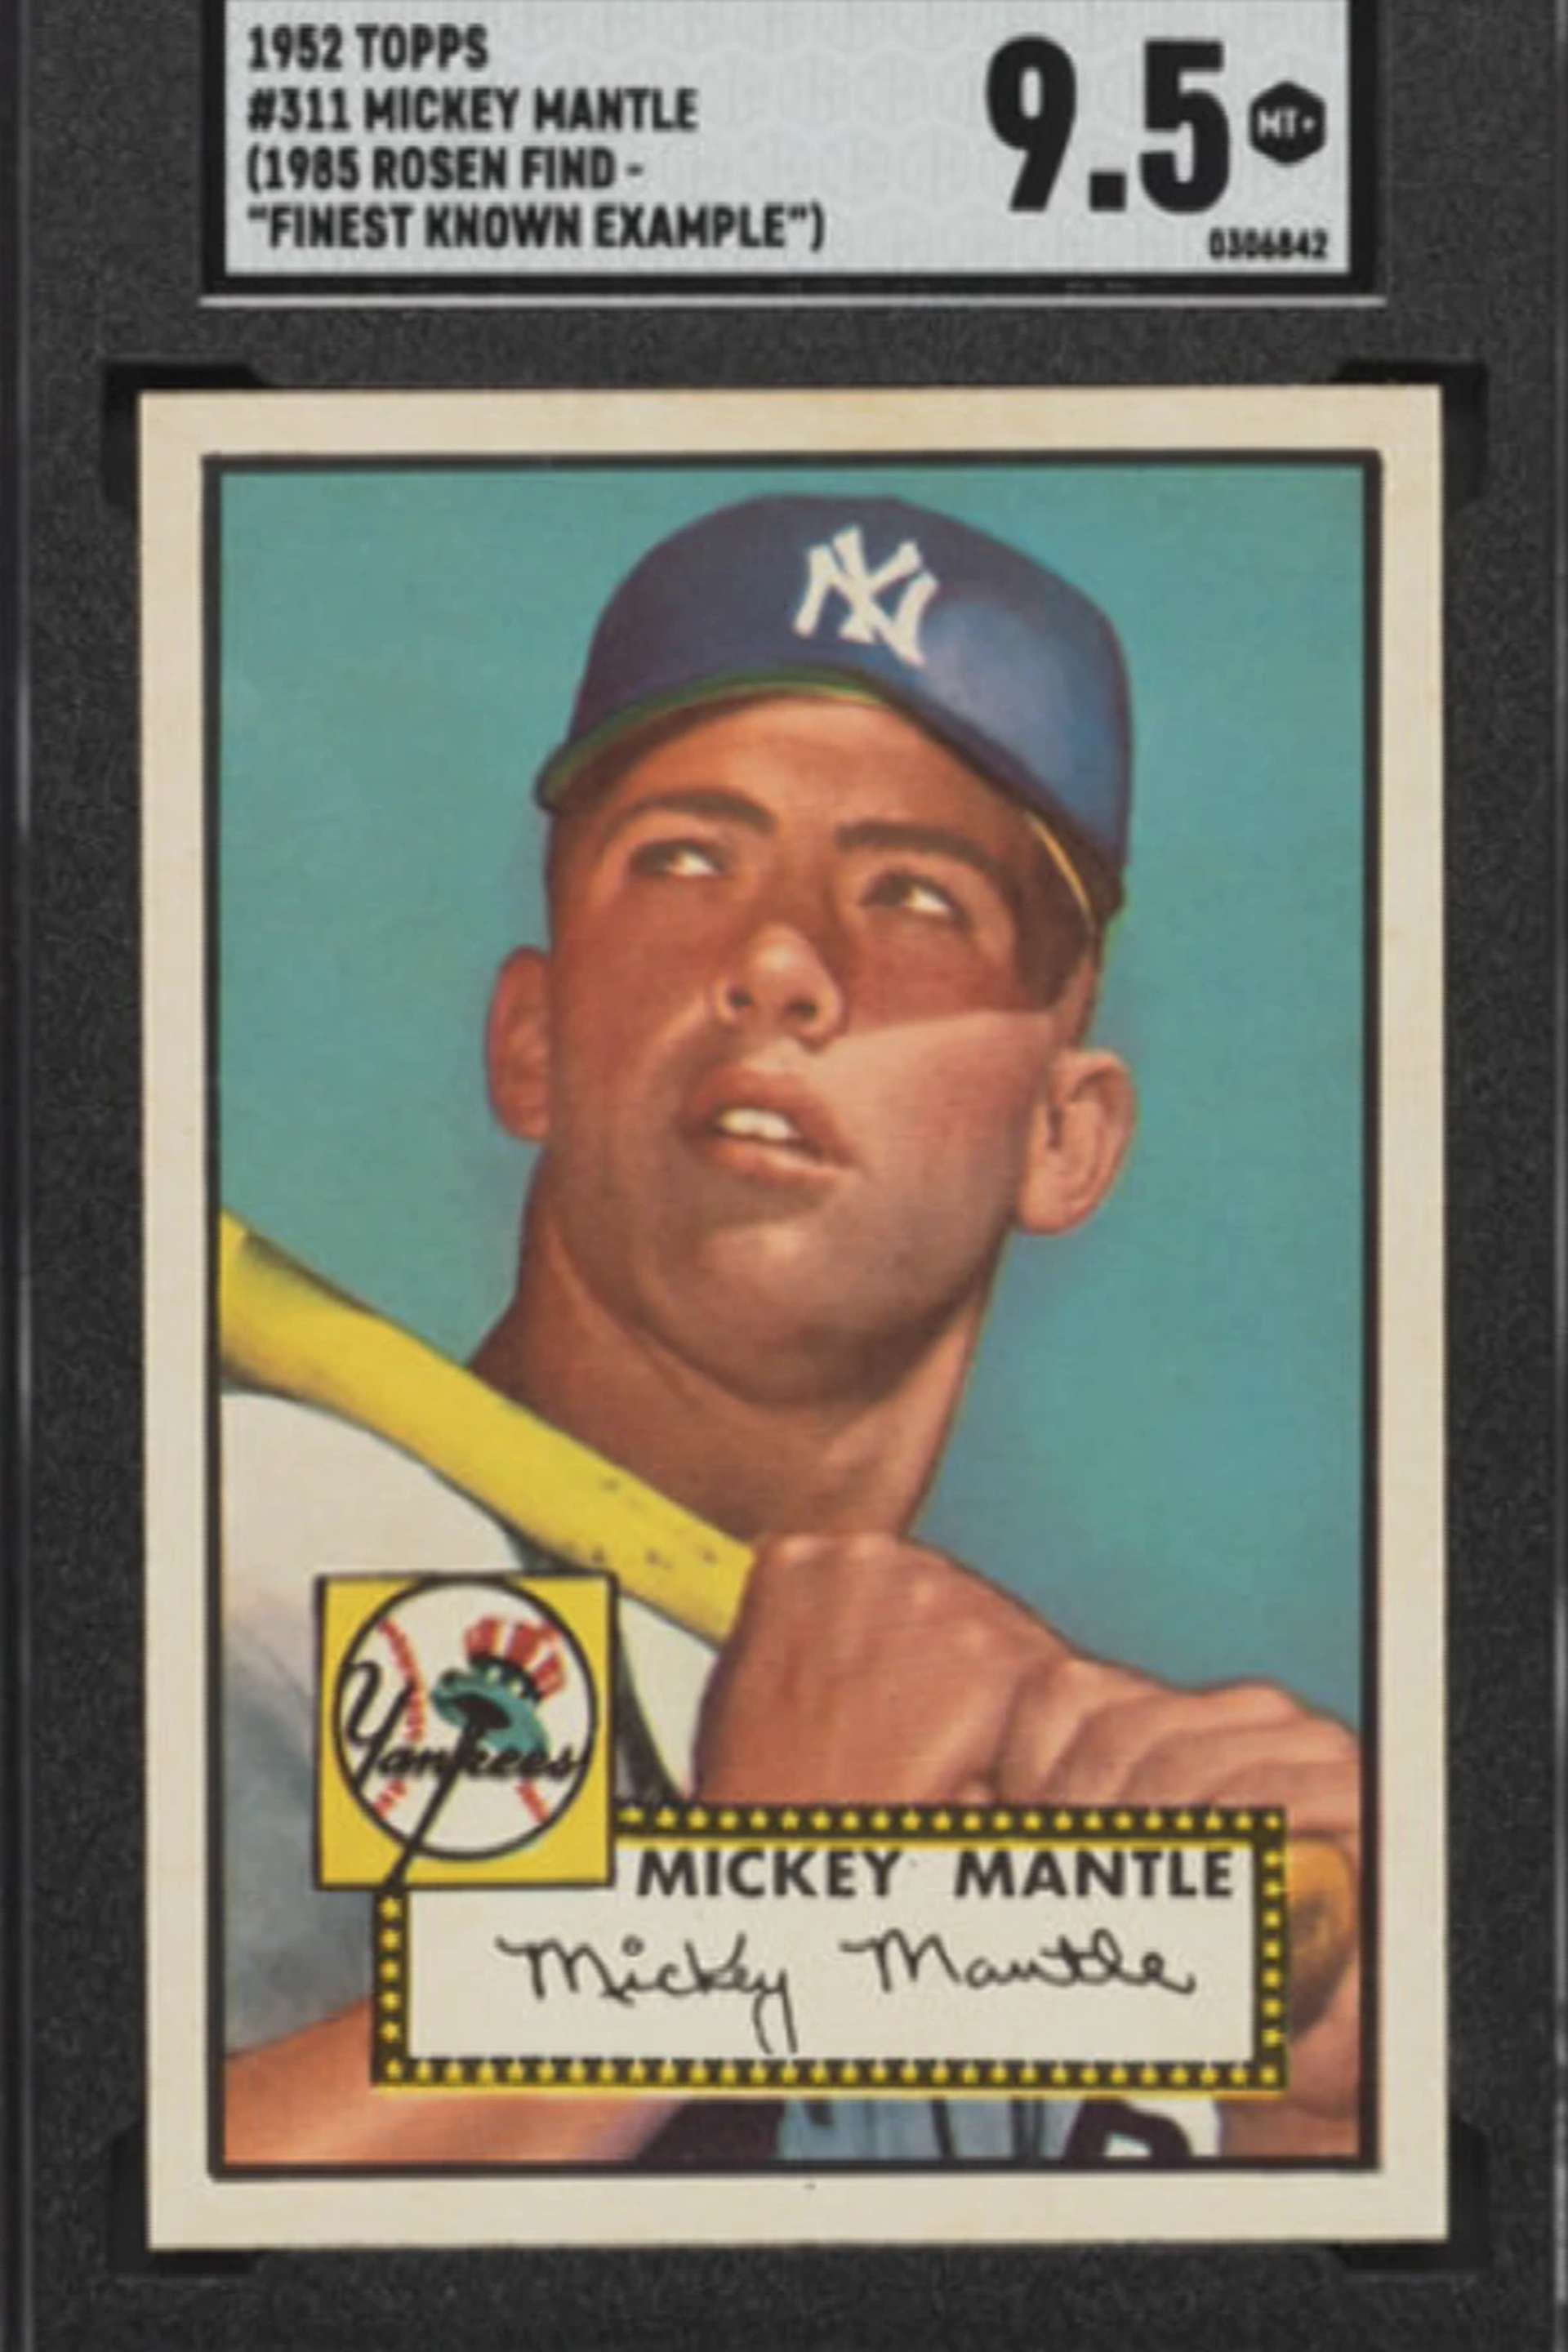 Image © WIFR / Mickey Mantel Baseball Card 1952